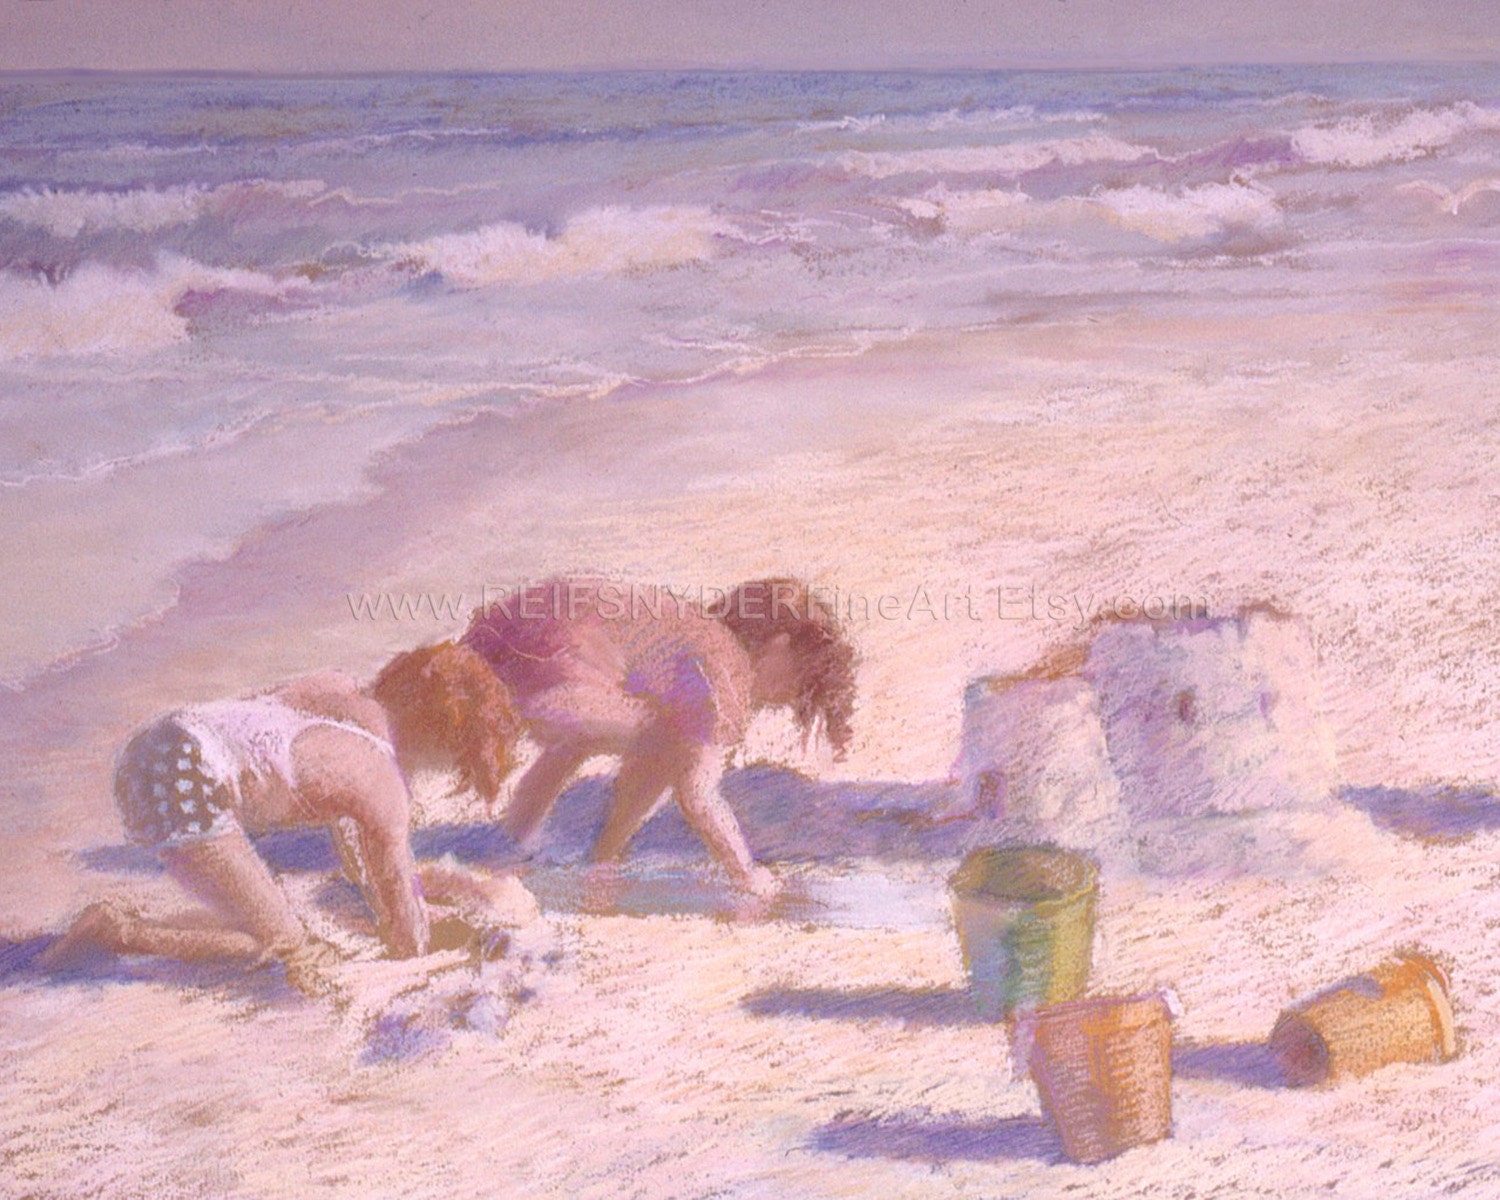 Giclee beach print of two children, playing in sand,sandcastle,ocean,shore,seashore,blue,yellow,pink,lavender - REIFSNYDERFineArt